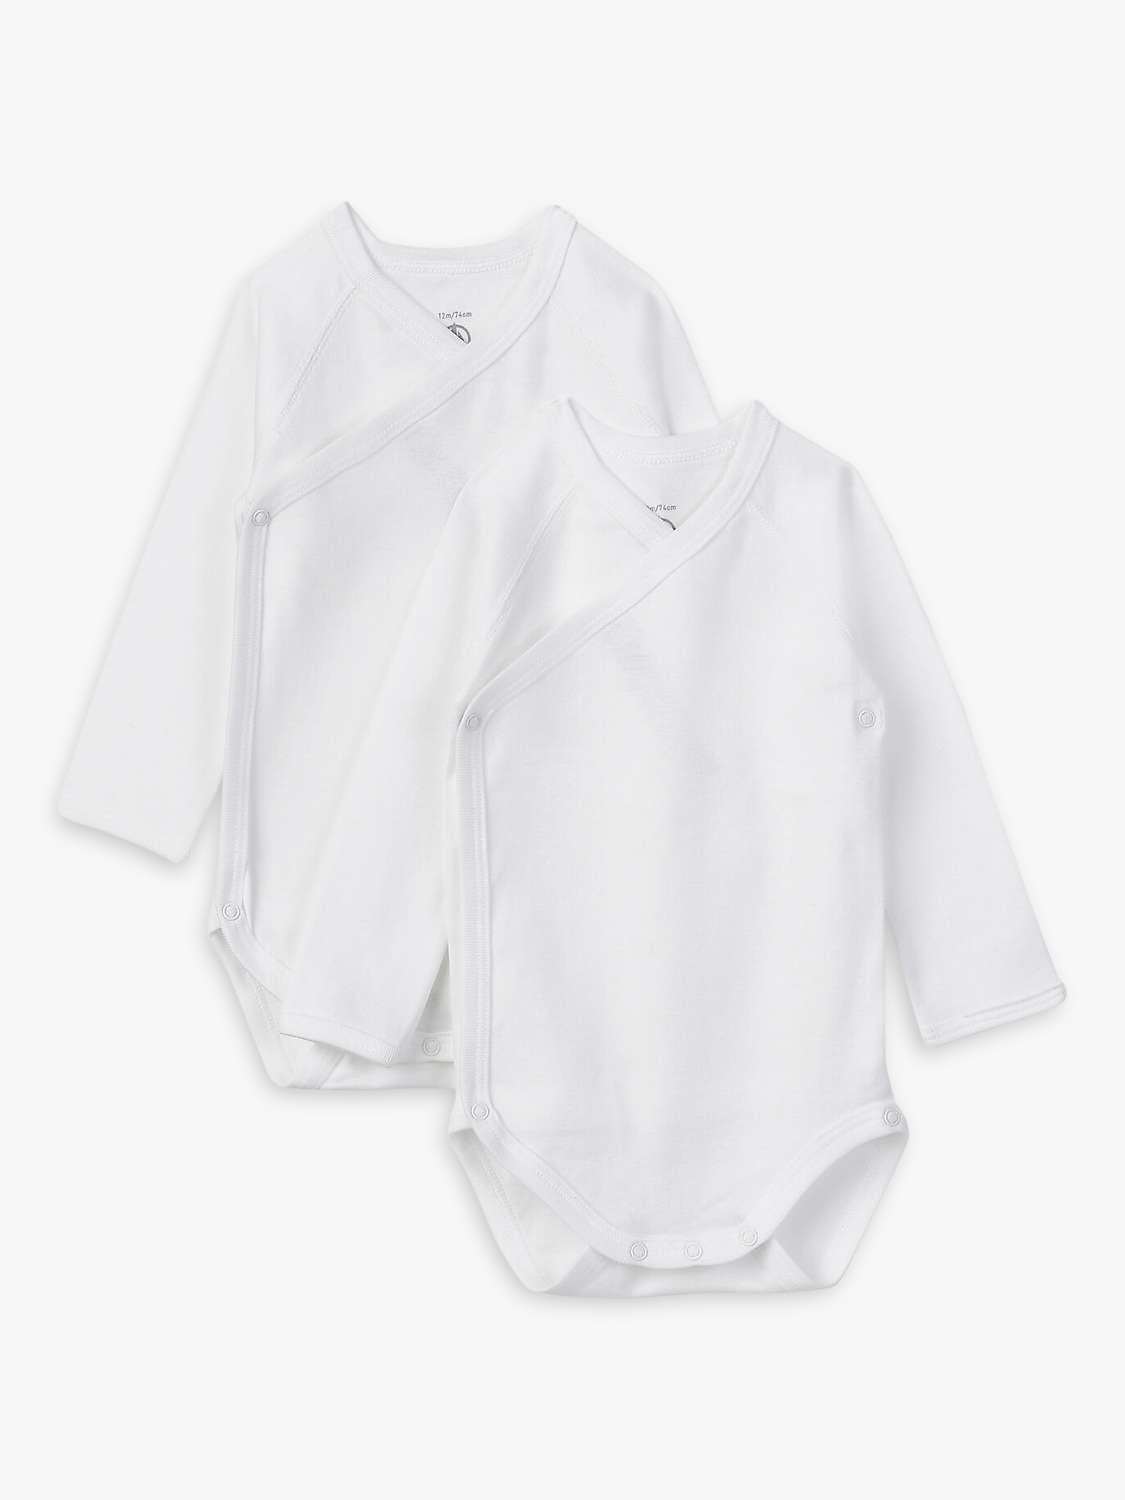 Buy Petit Bateau Baby Long Sleeve Wrap Bodysuit, Pack of 2, White Online at johnlewis.com